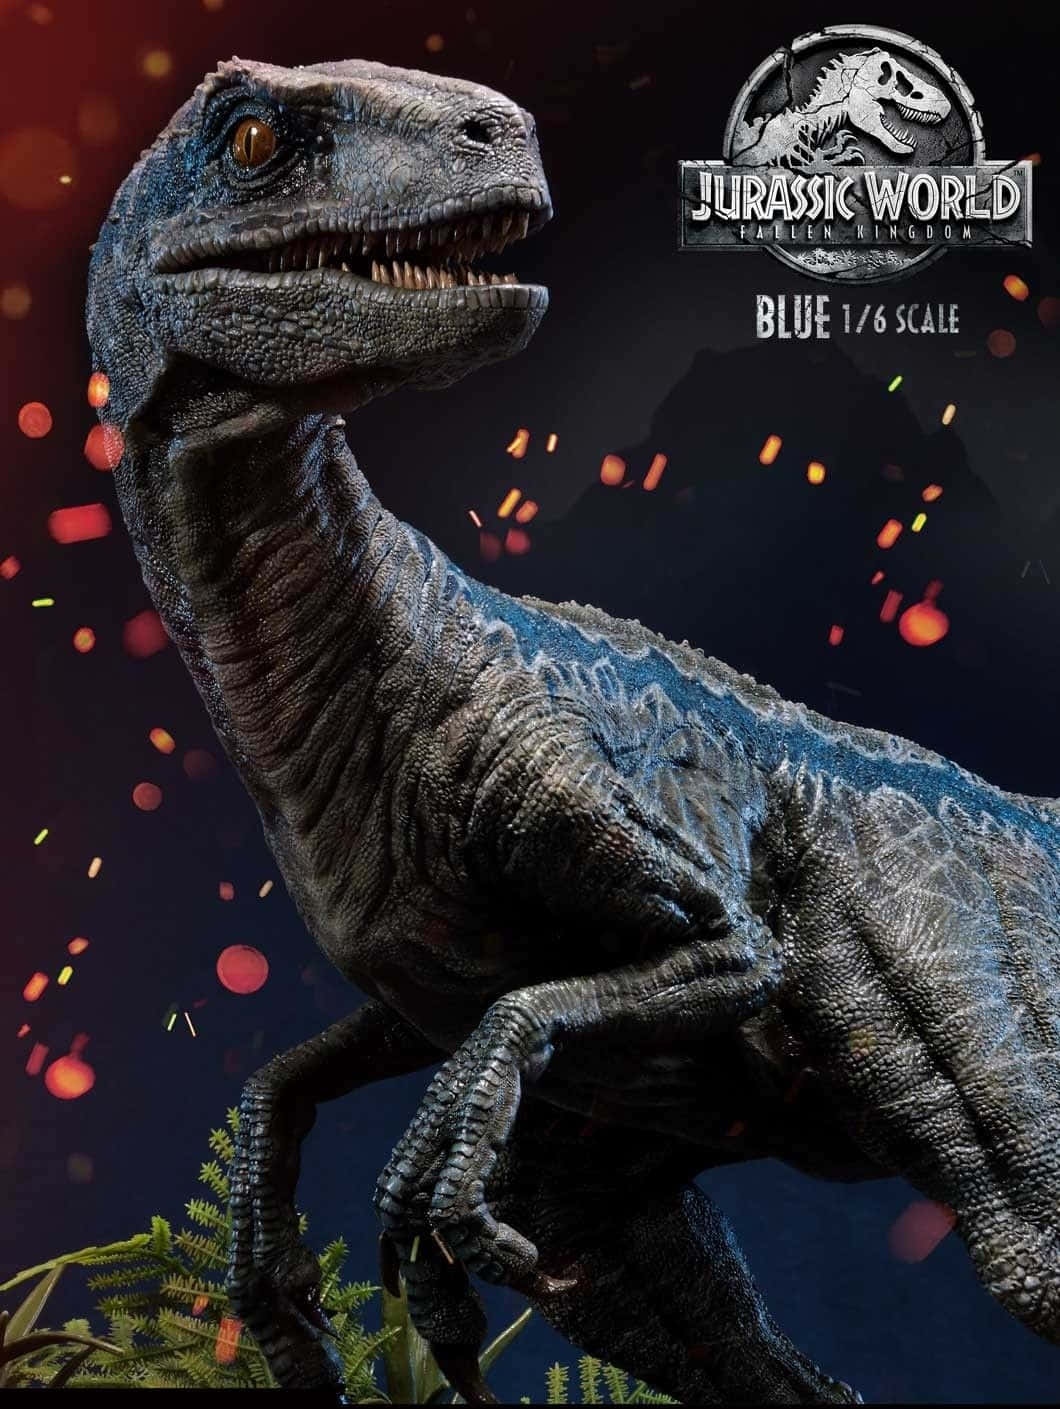 Blue Jurassic World Poster Wallpaper